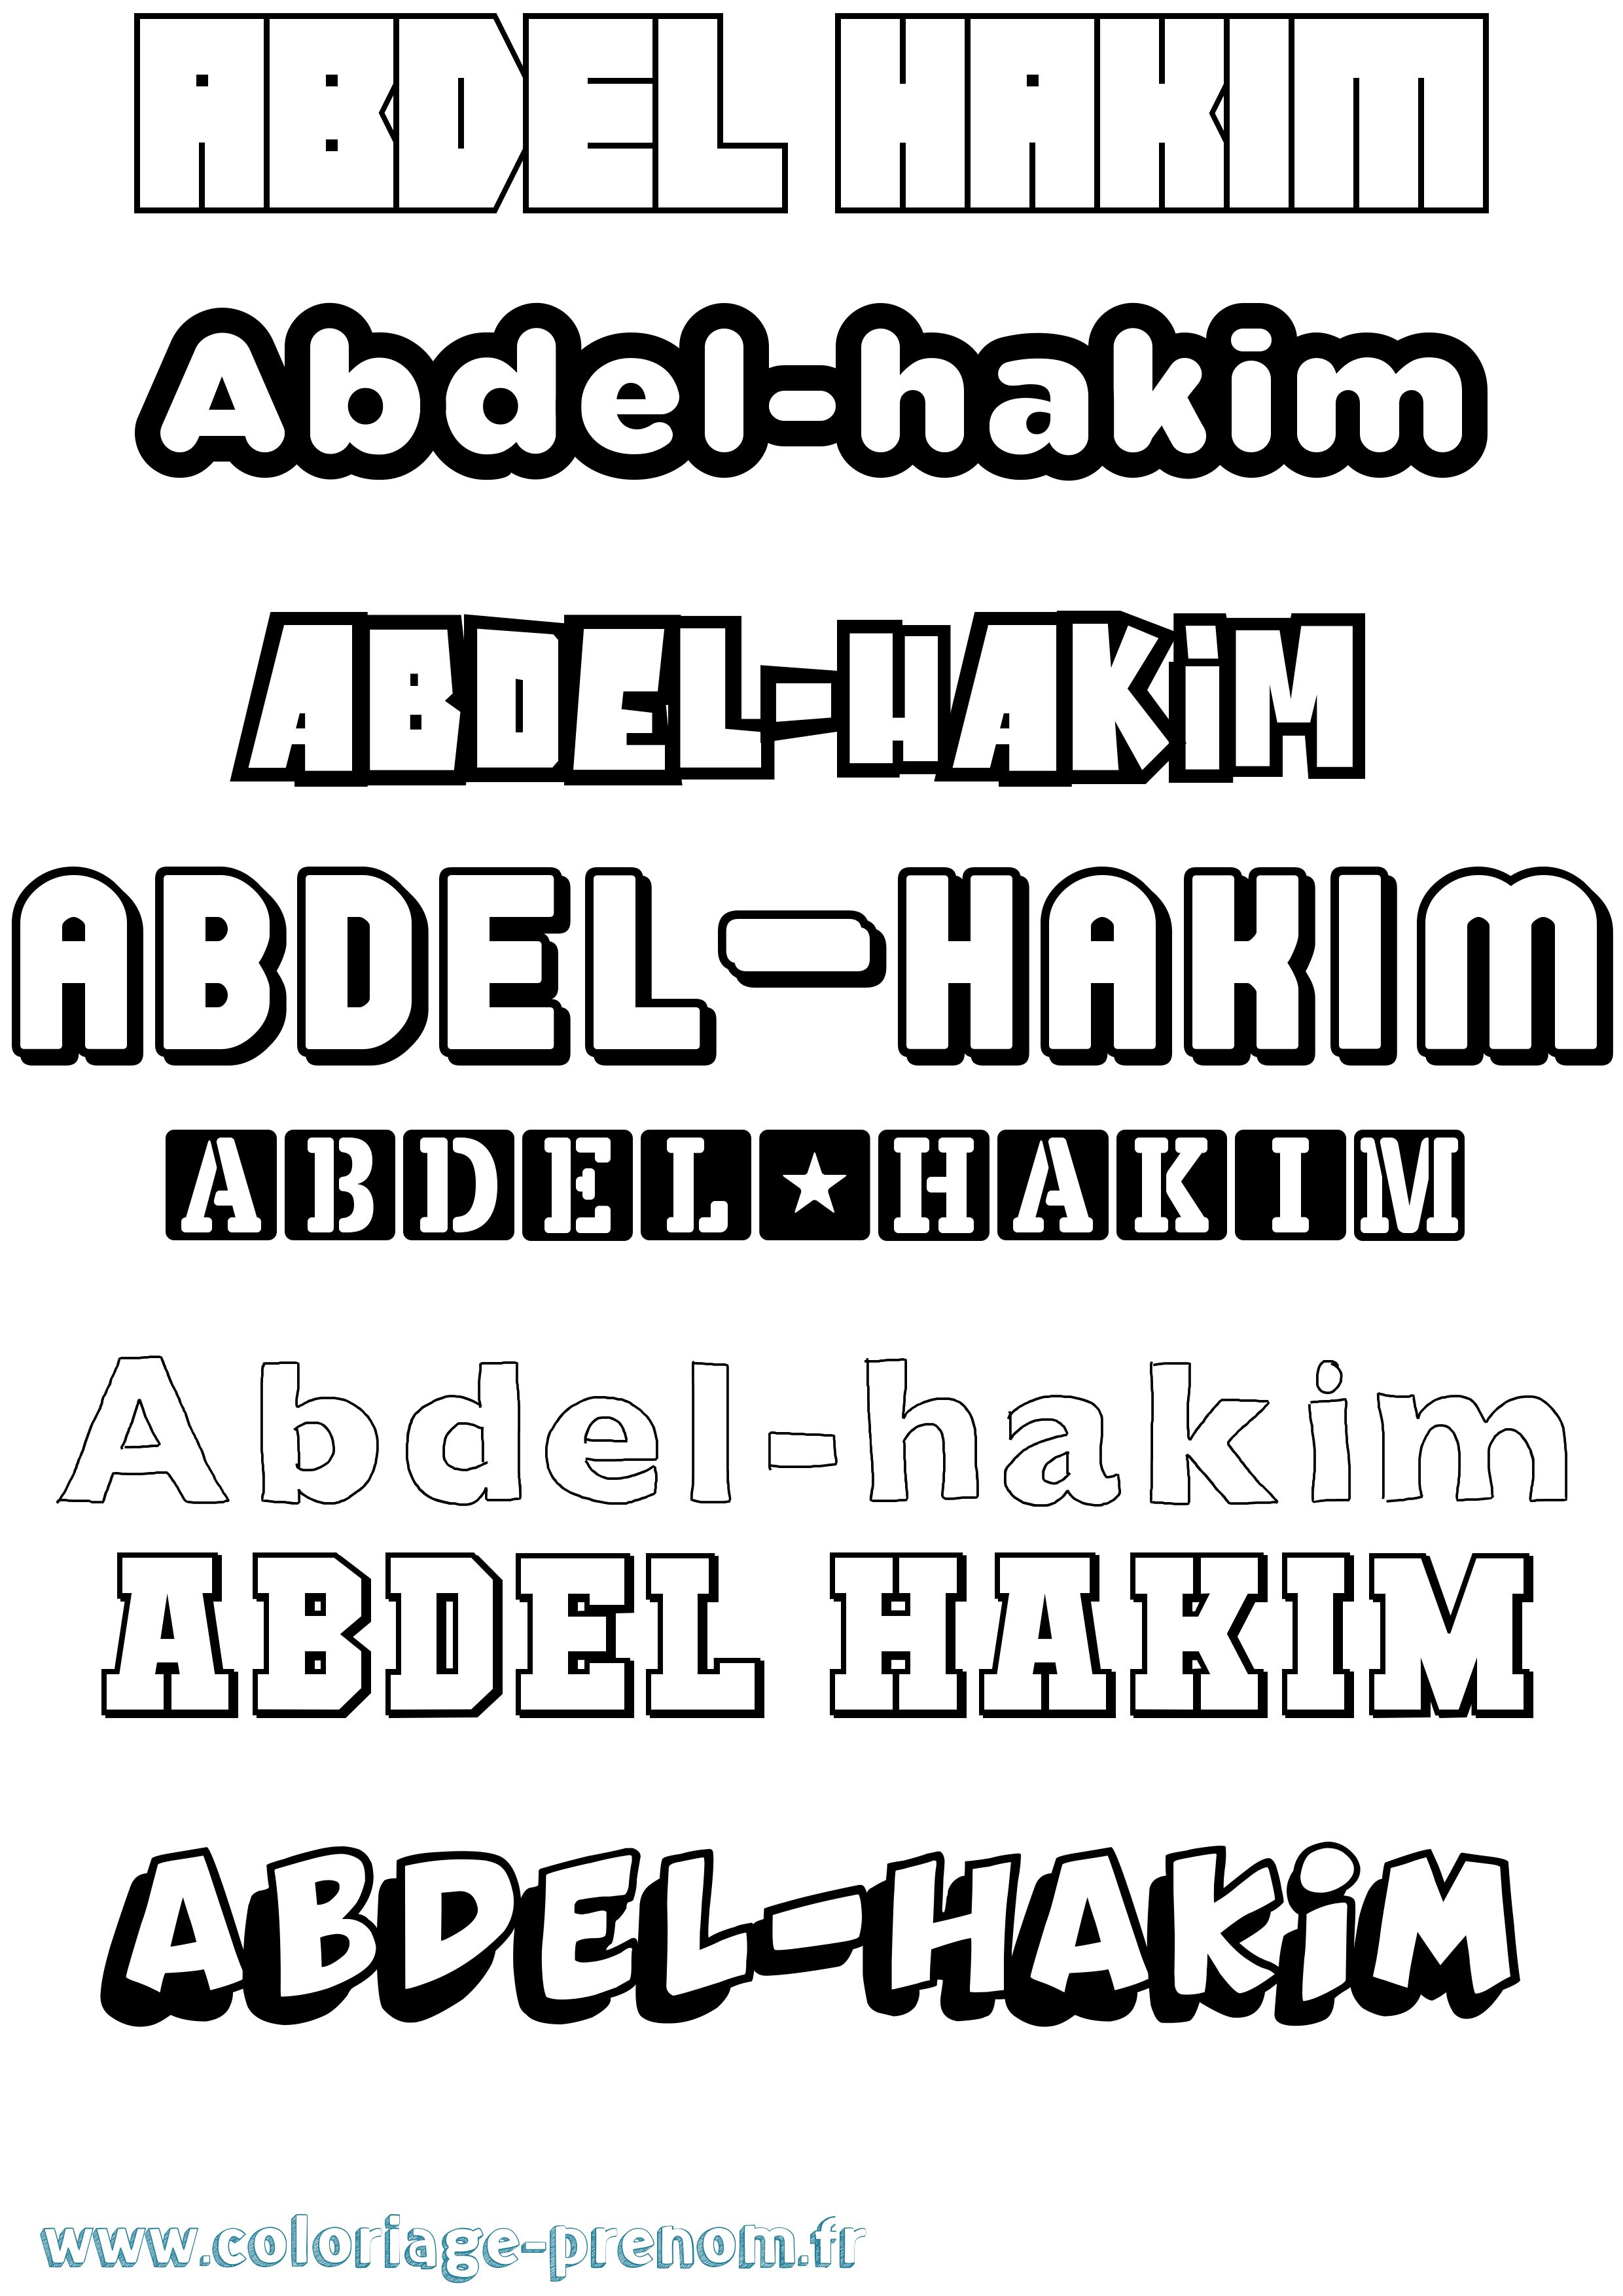 Coloriage prénom Abdel-Hakim Simple